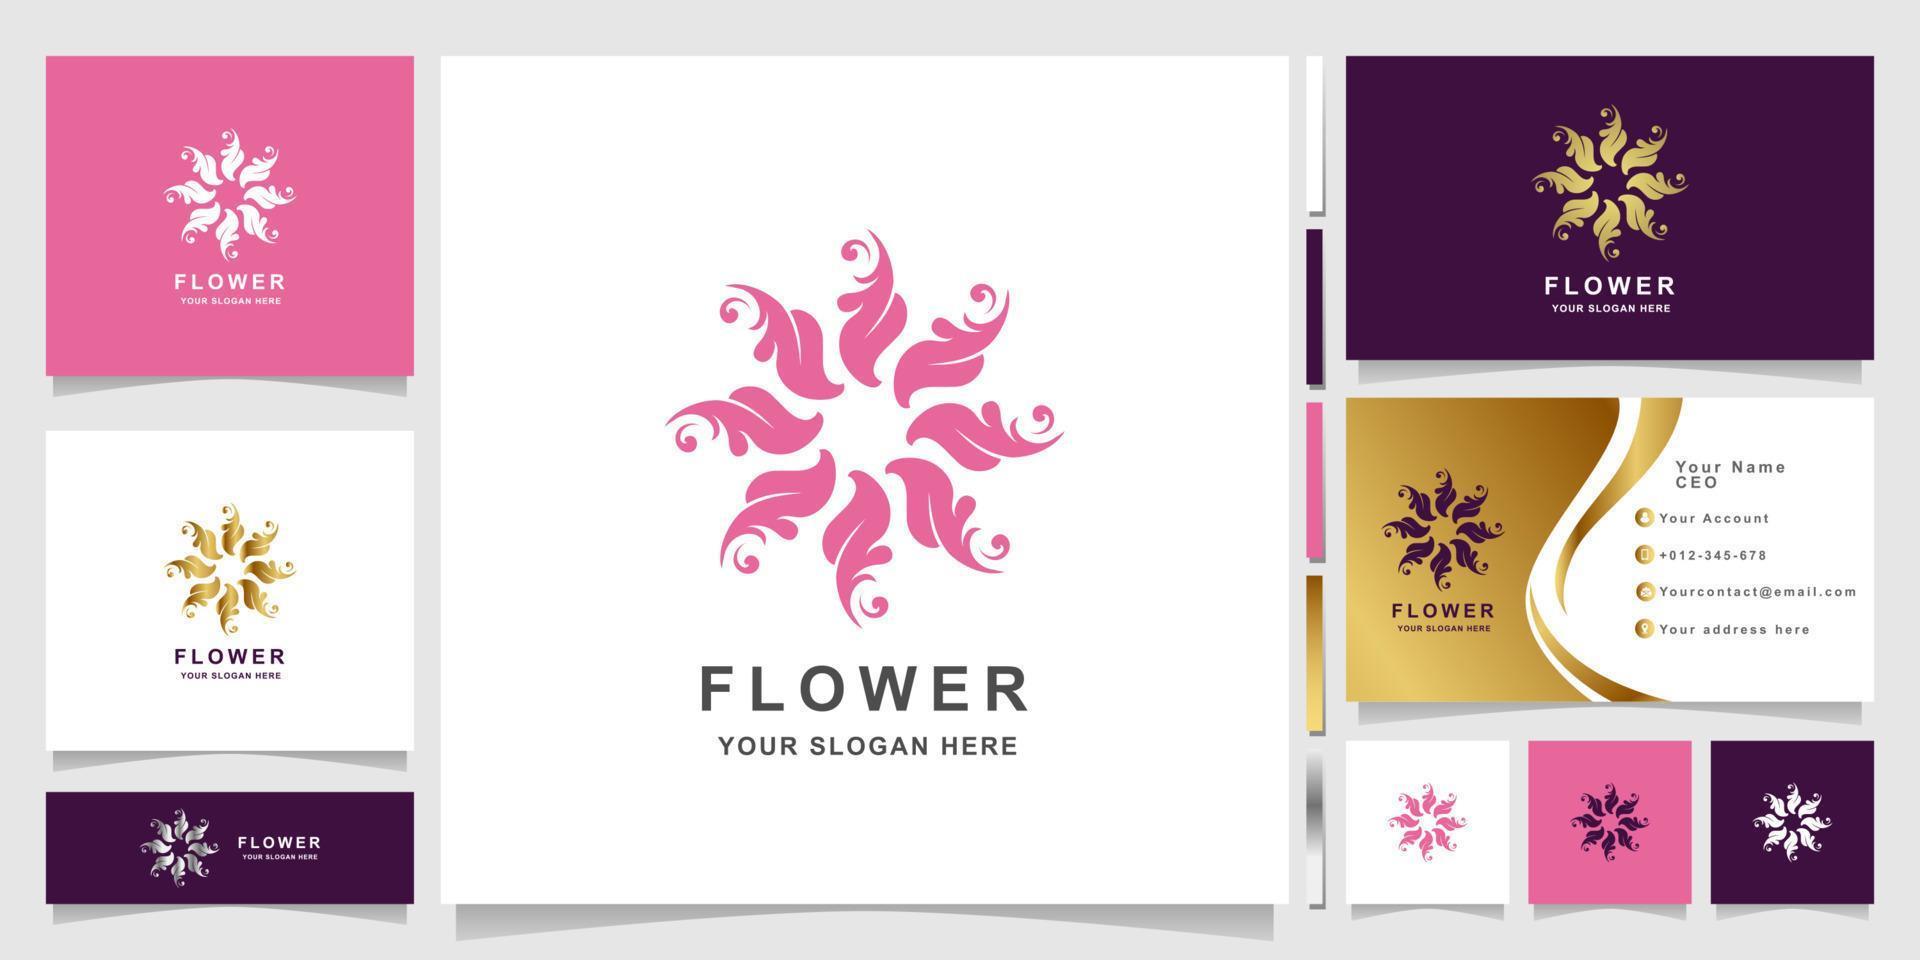 Minimalist elegant ornament flower logo template with business card design vector